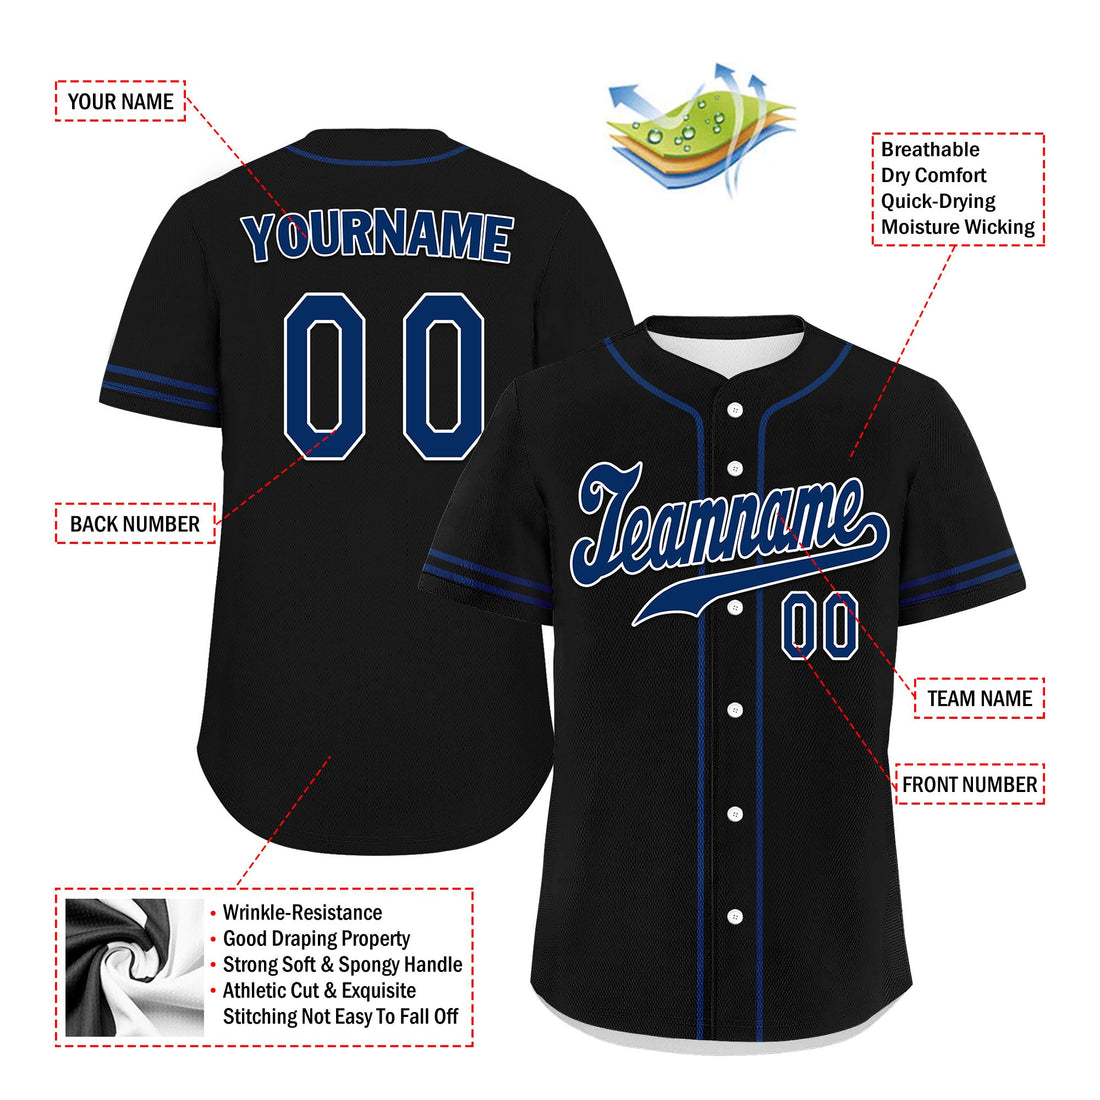 Custom Black Classic Style Blue Personalized Authentic Baseball Jersey UN002-bd0b00d8-bd